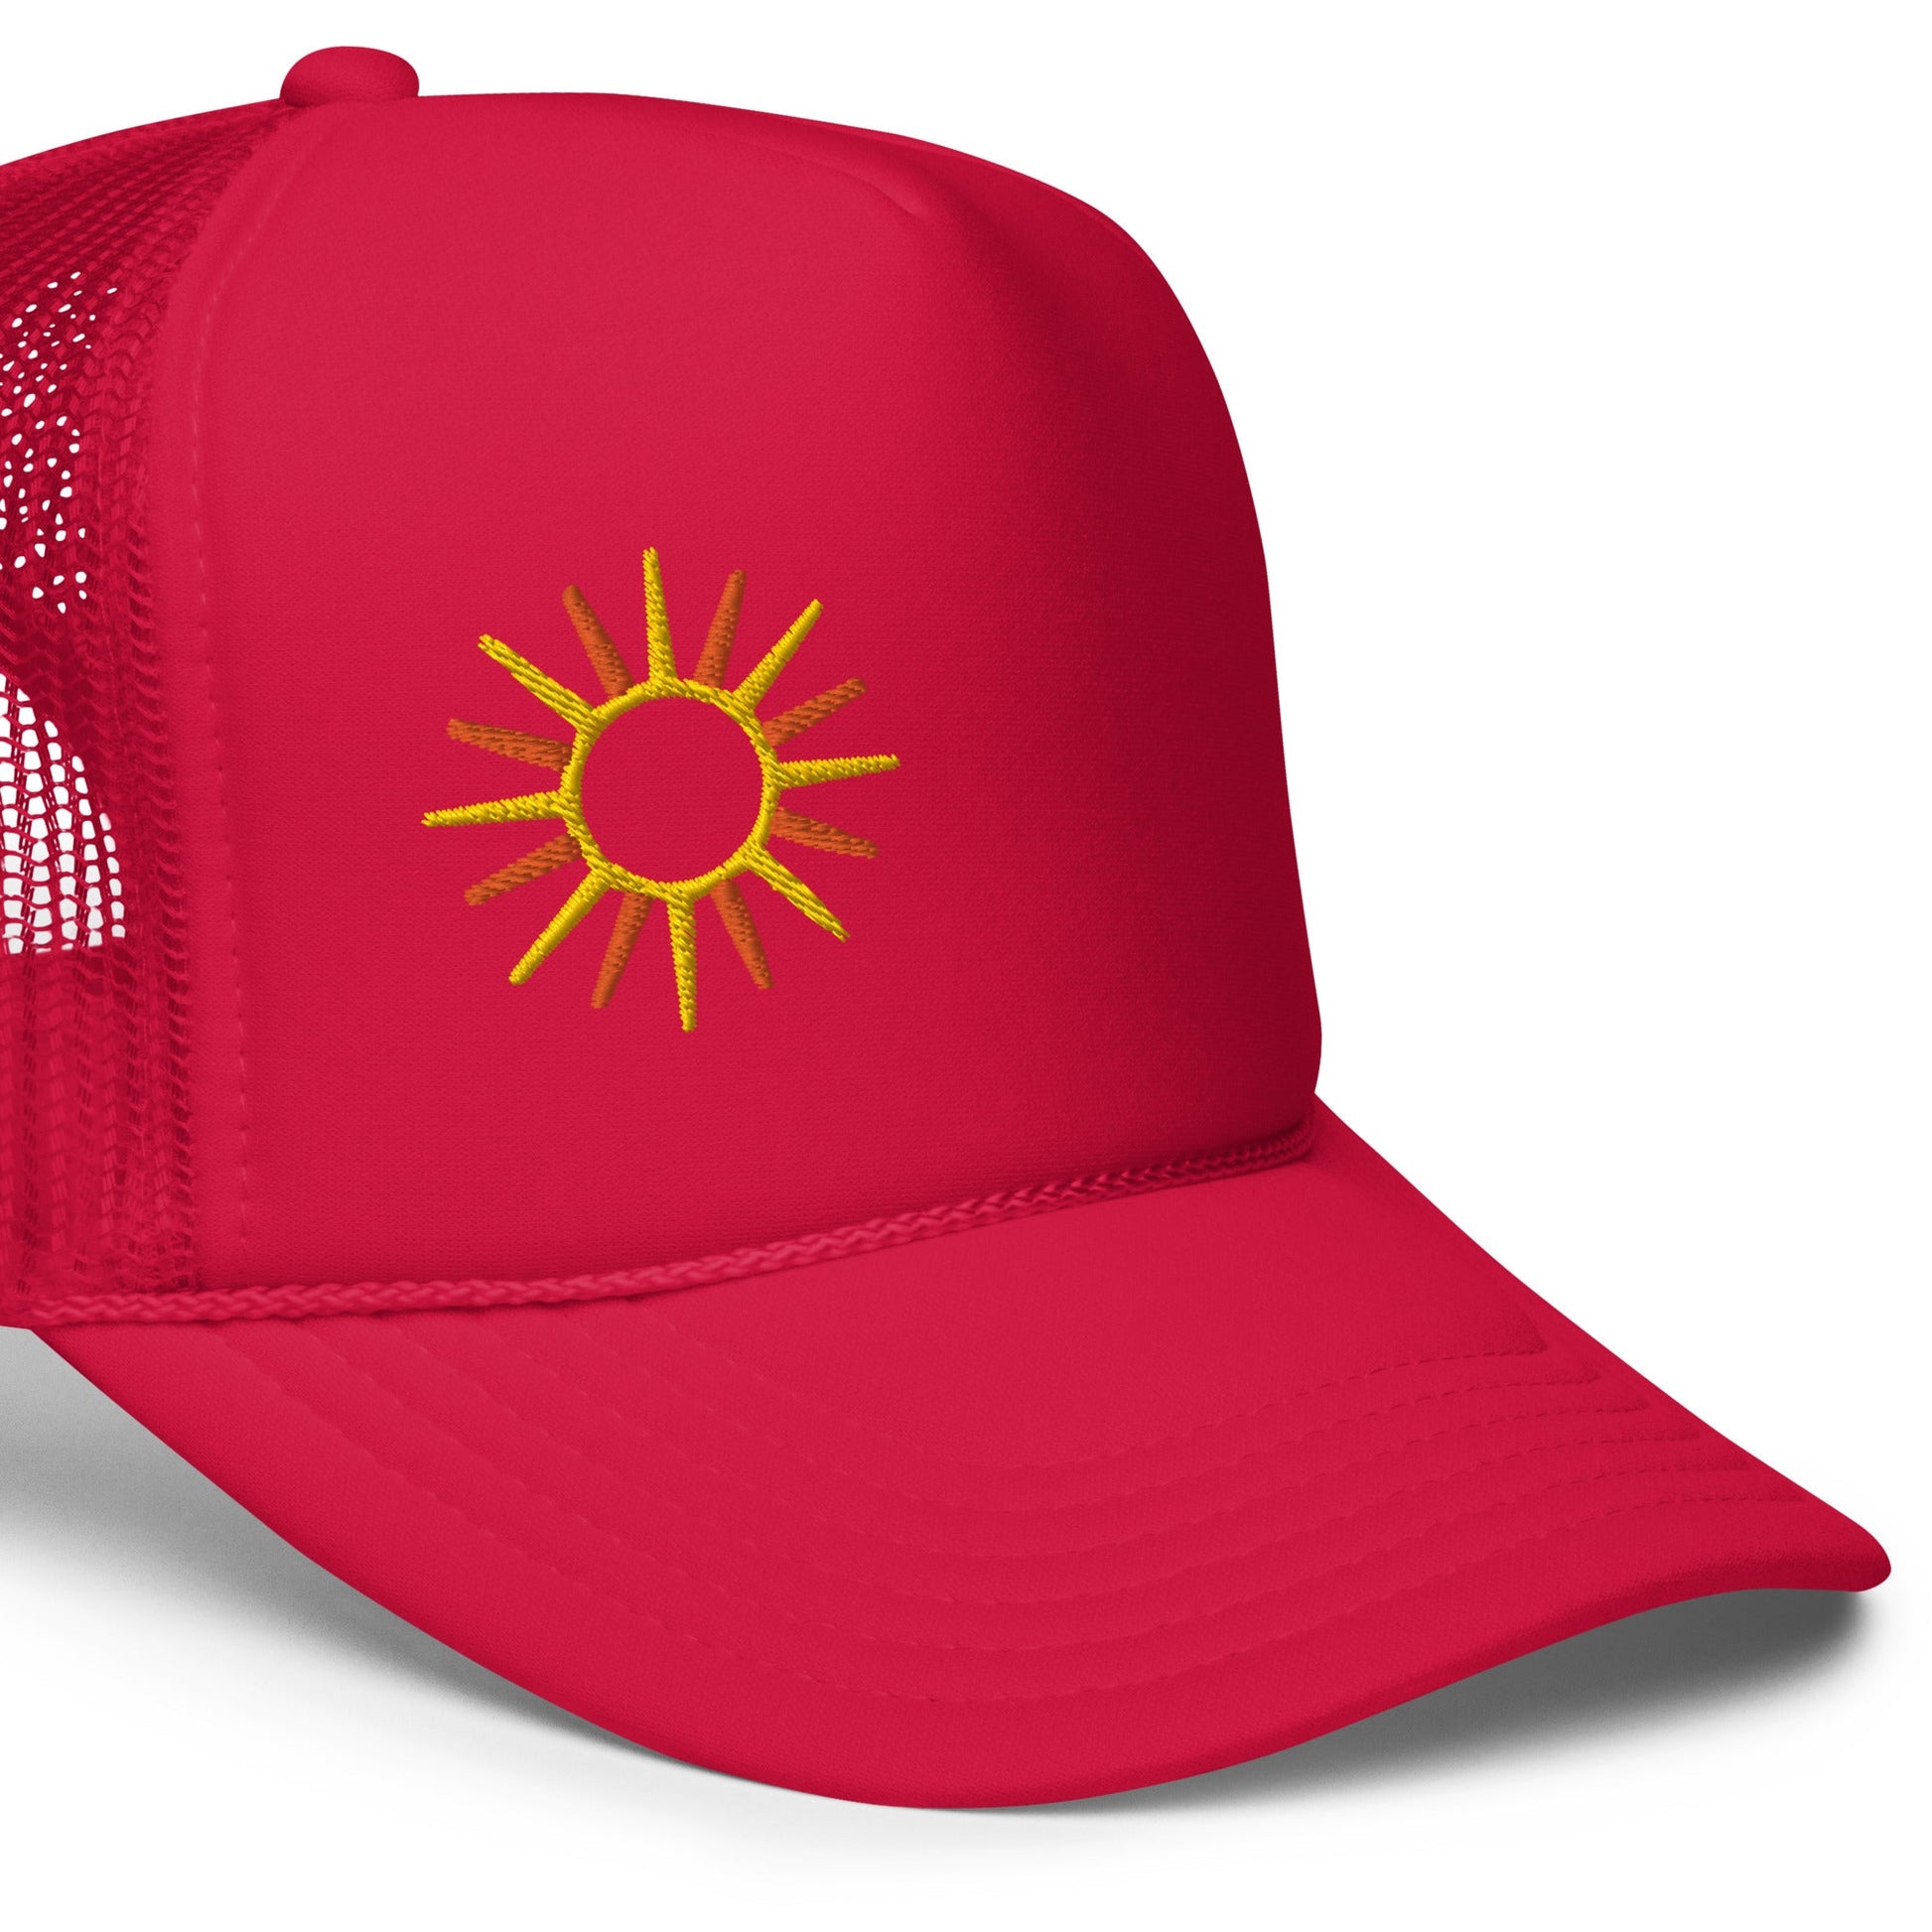 Sunny trucker hat - Sun Fun Family